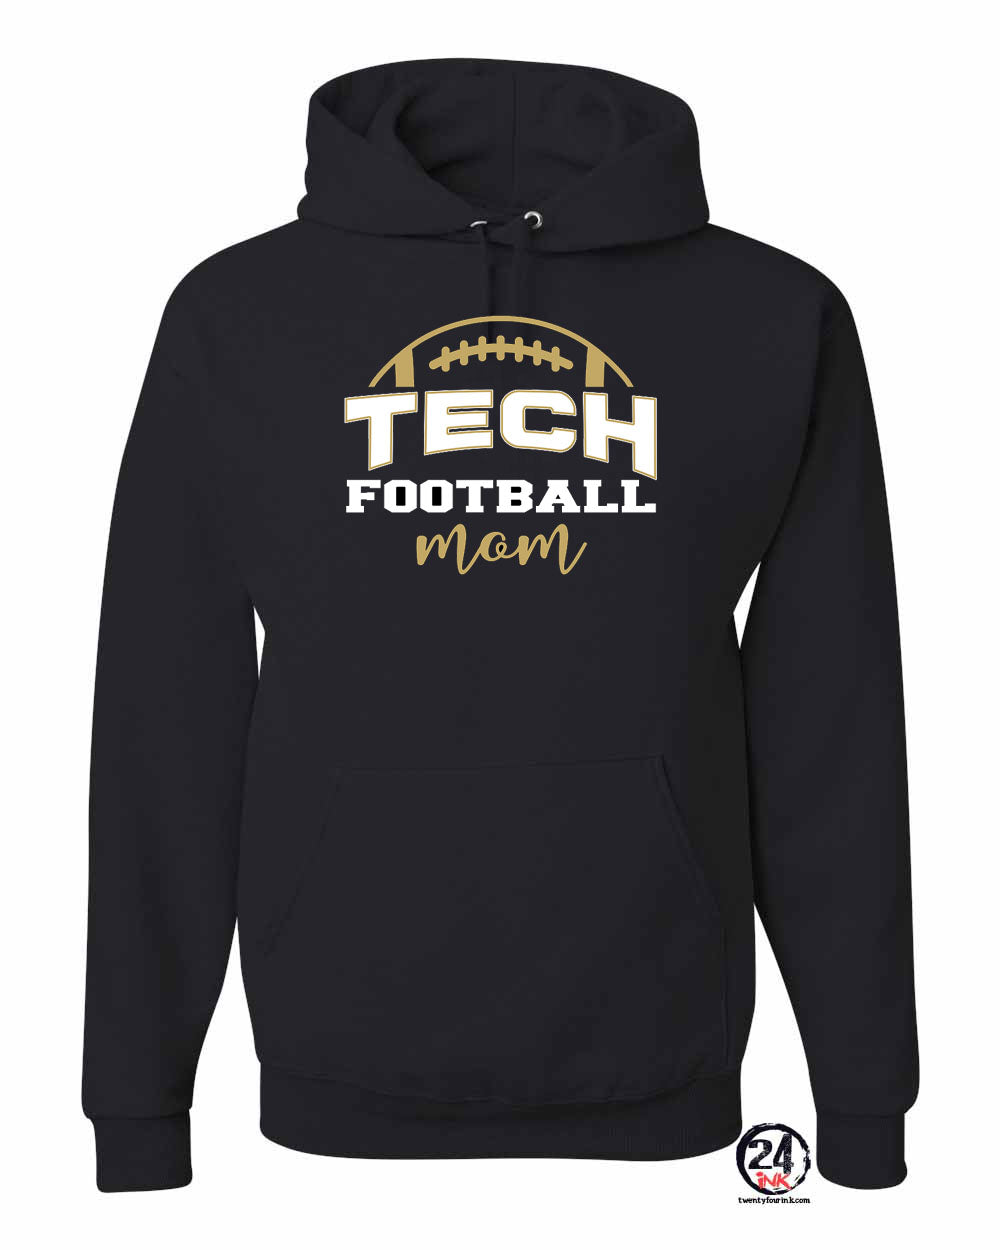 Tech Football Mom Hooded Sweatshirt